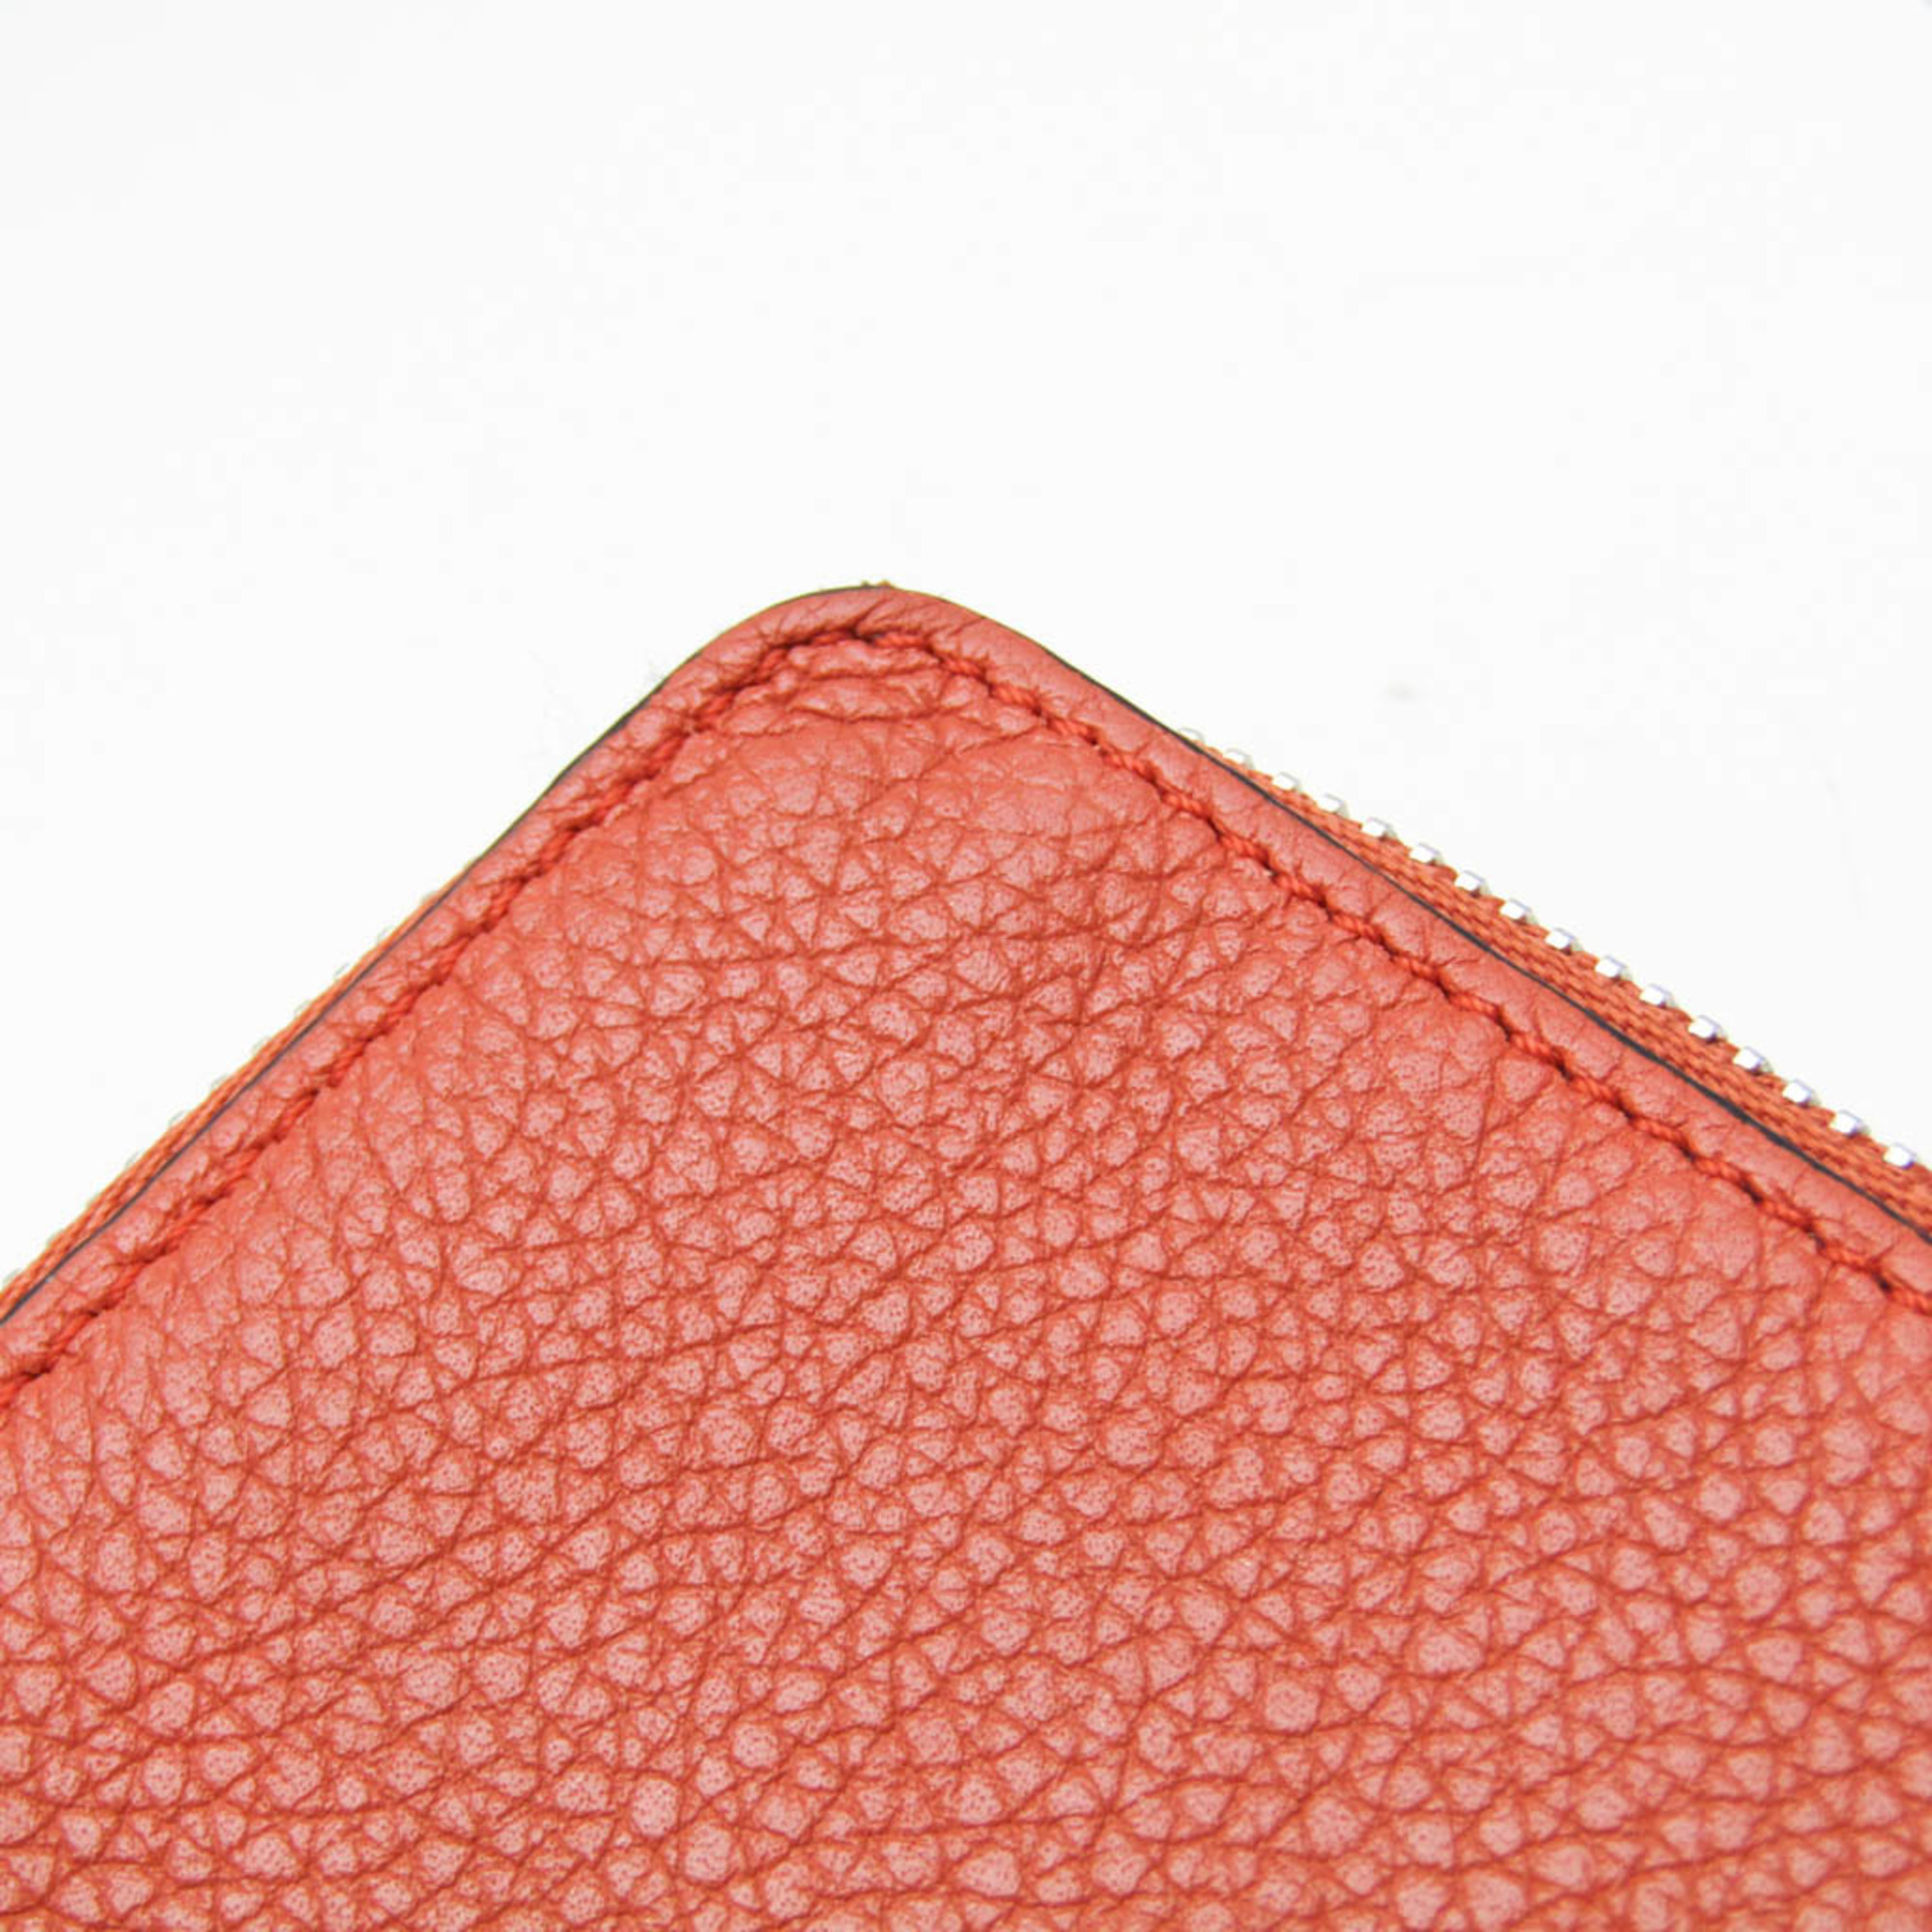 Loewe Anagram Fragment Case Leather Card Case Brown,Pink Orange